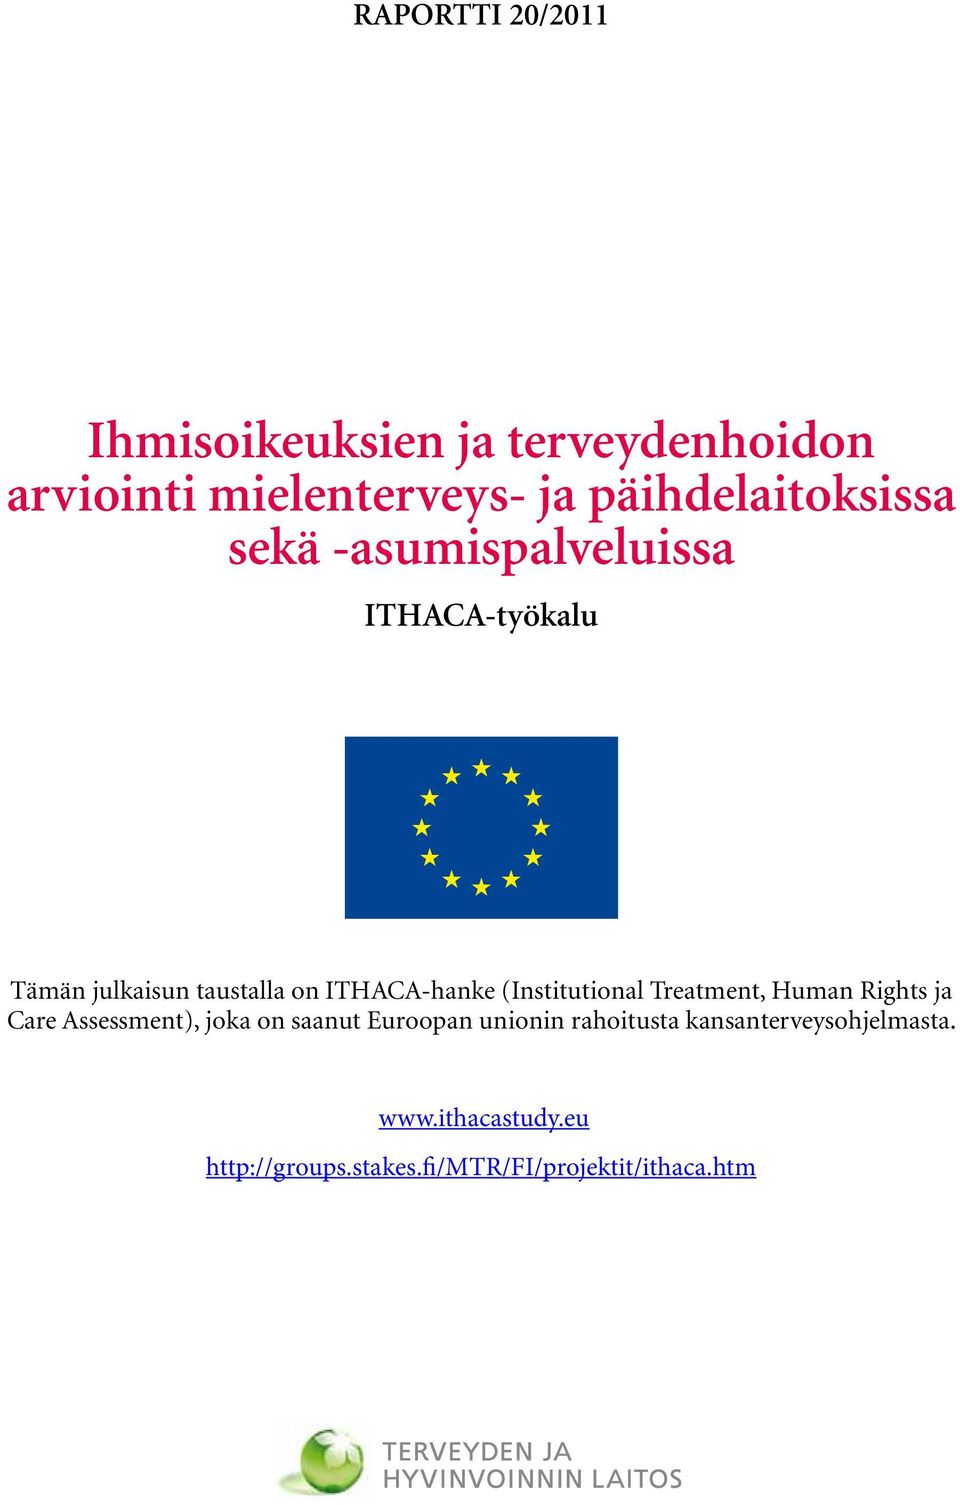 ITHACA-hanke (Institutional Treatment, Human Rights ja Care Assessment), joka on saanut